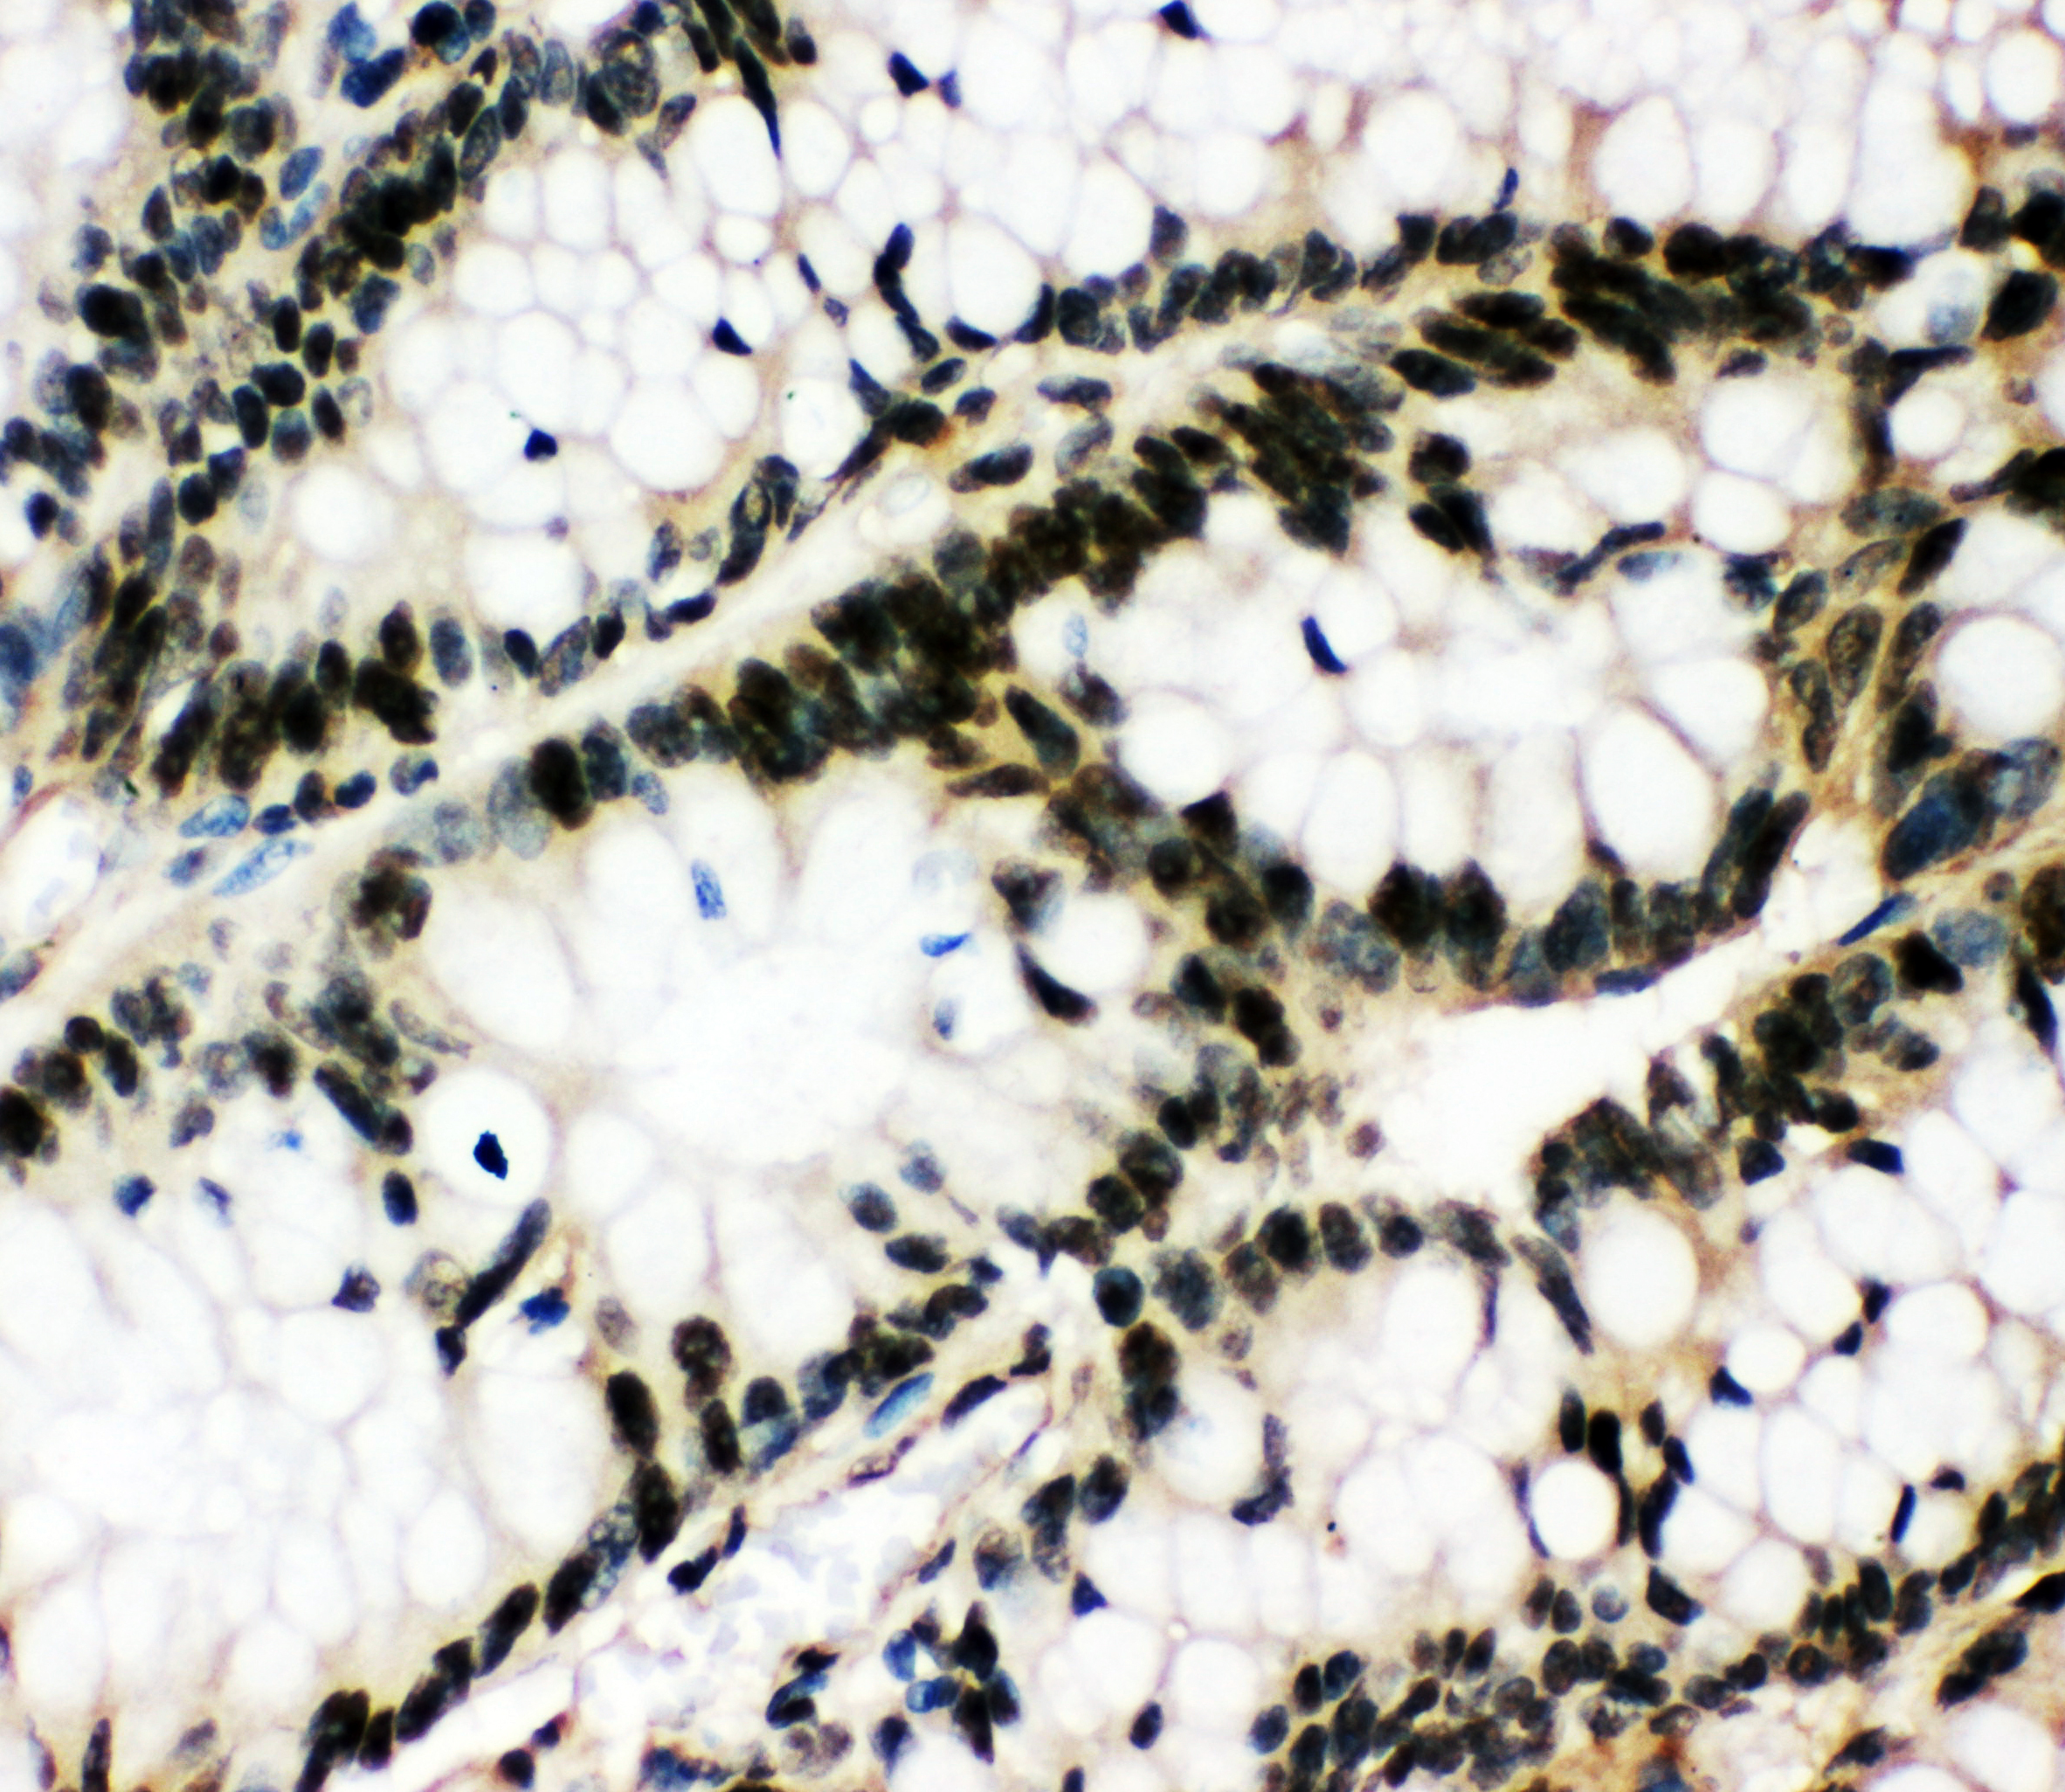 EGR1 Antibody - N-terminal region (OABB01340) in Human Intestinal Cancer Tissue using Immunohistochemistry